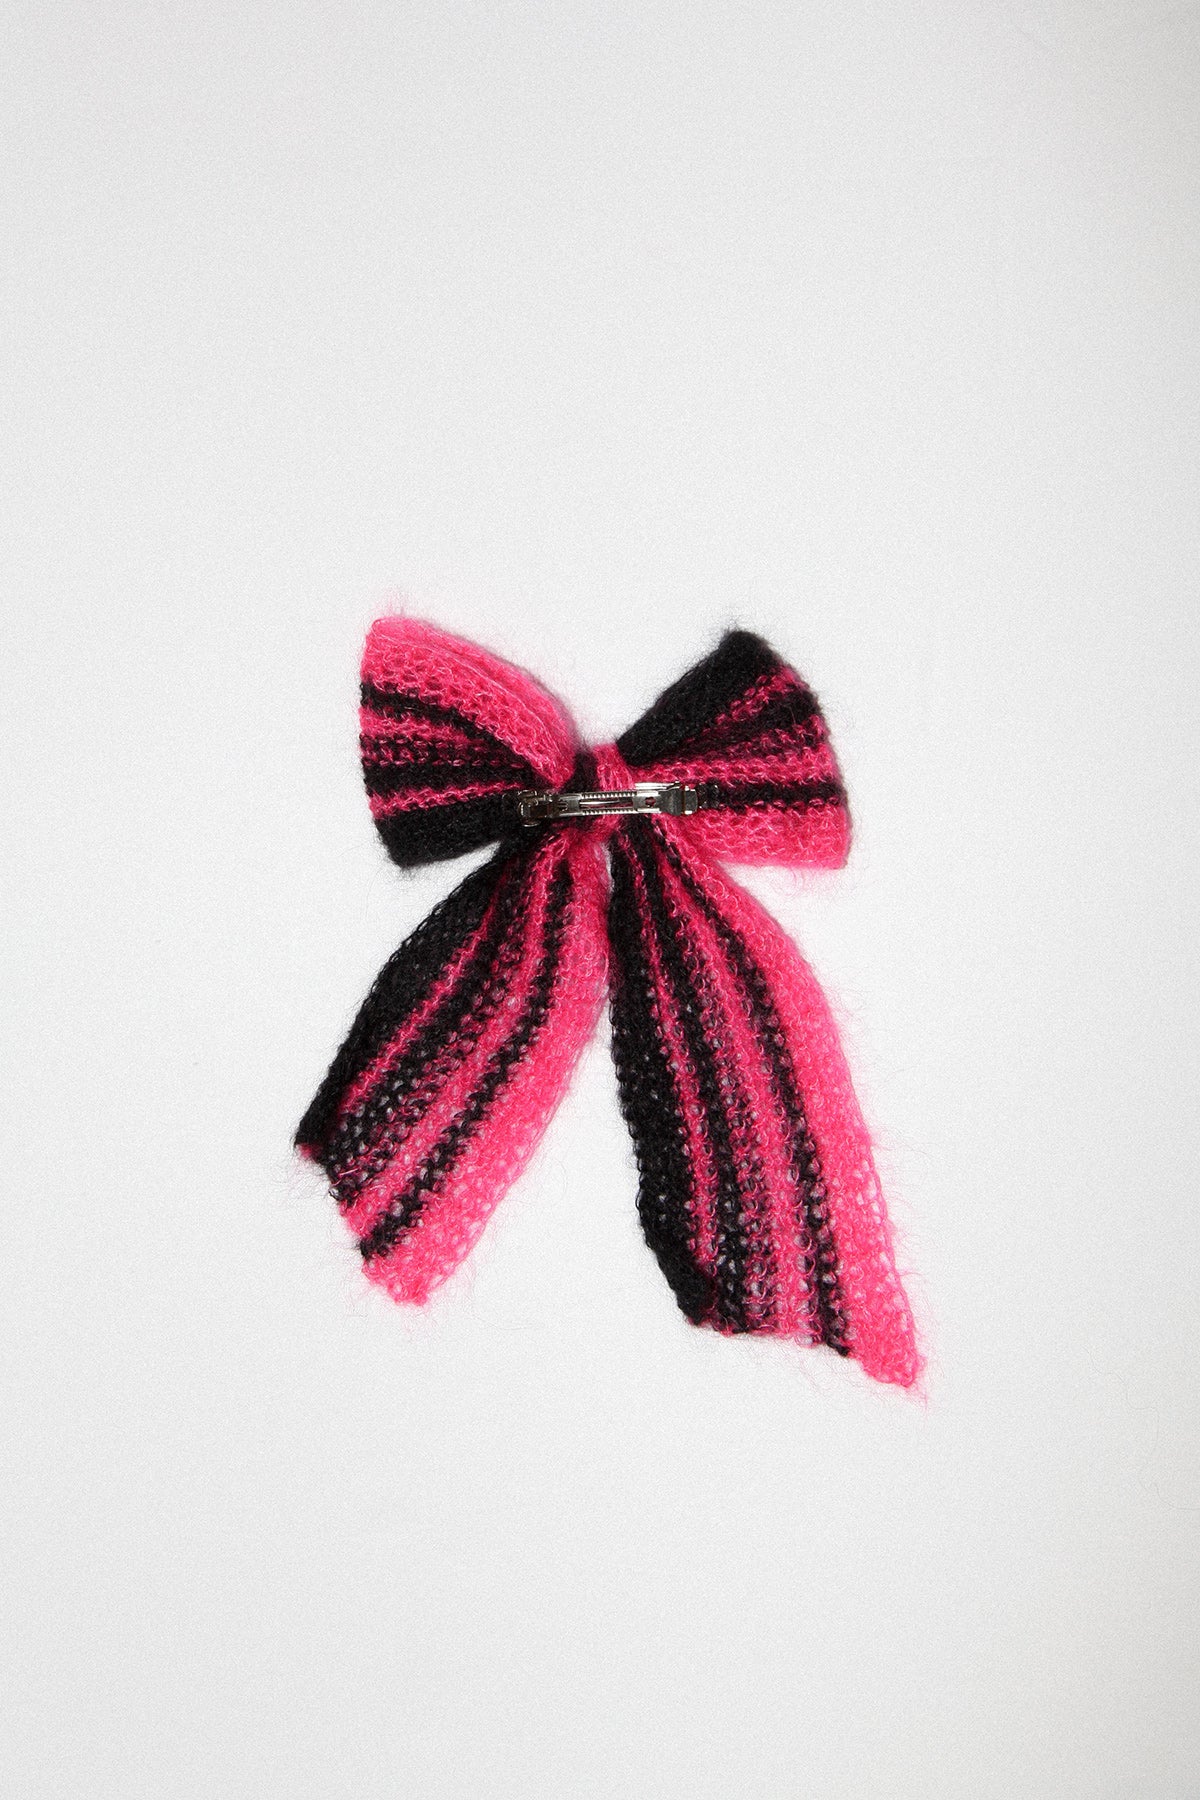 Funny Sad Stuff Large Crocheted Bow in Black & Fuchsia Stripe